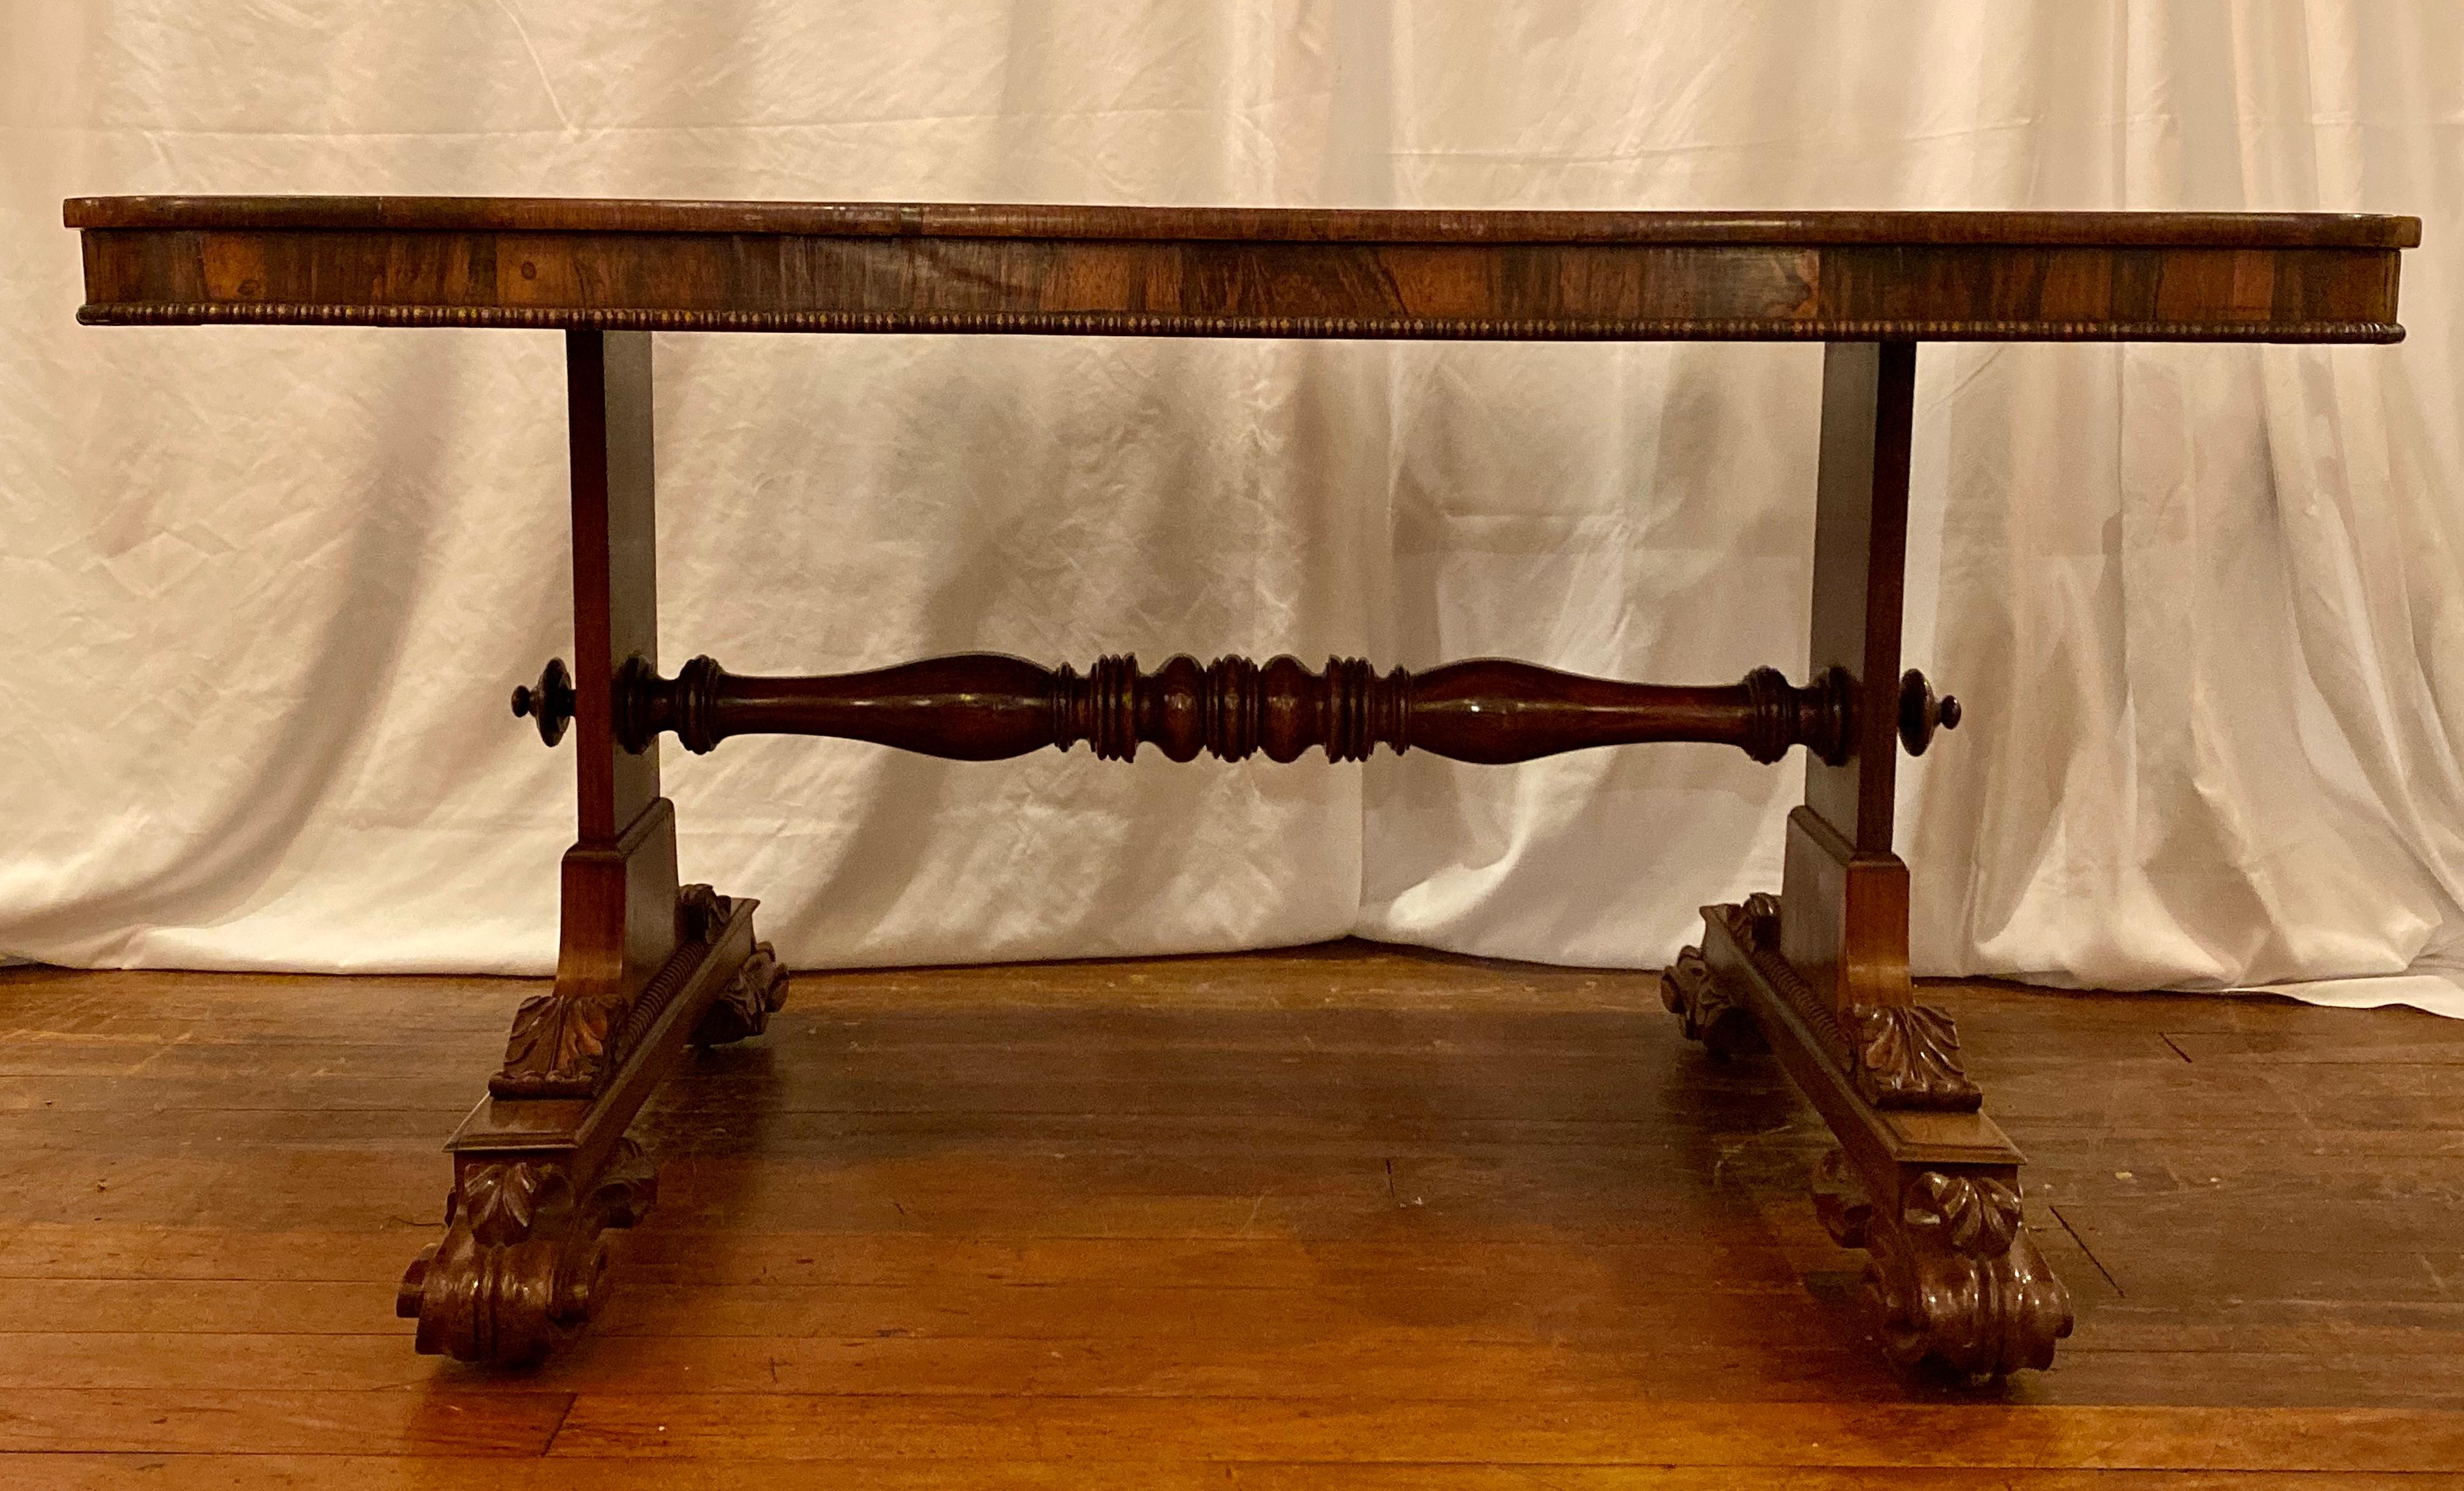 Antique English William IV rosewood table, circa 1830-1840.
ECT014.